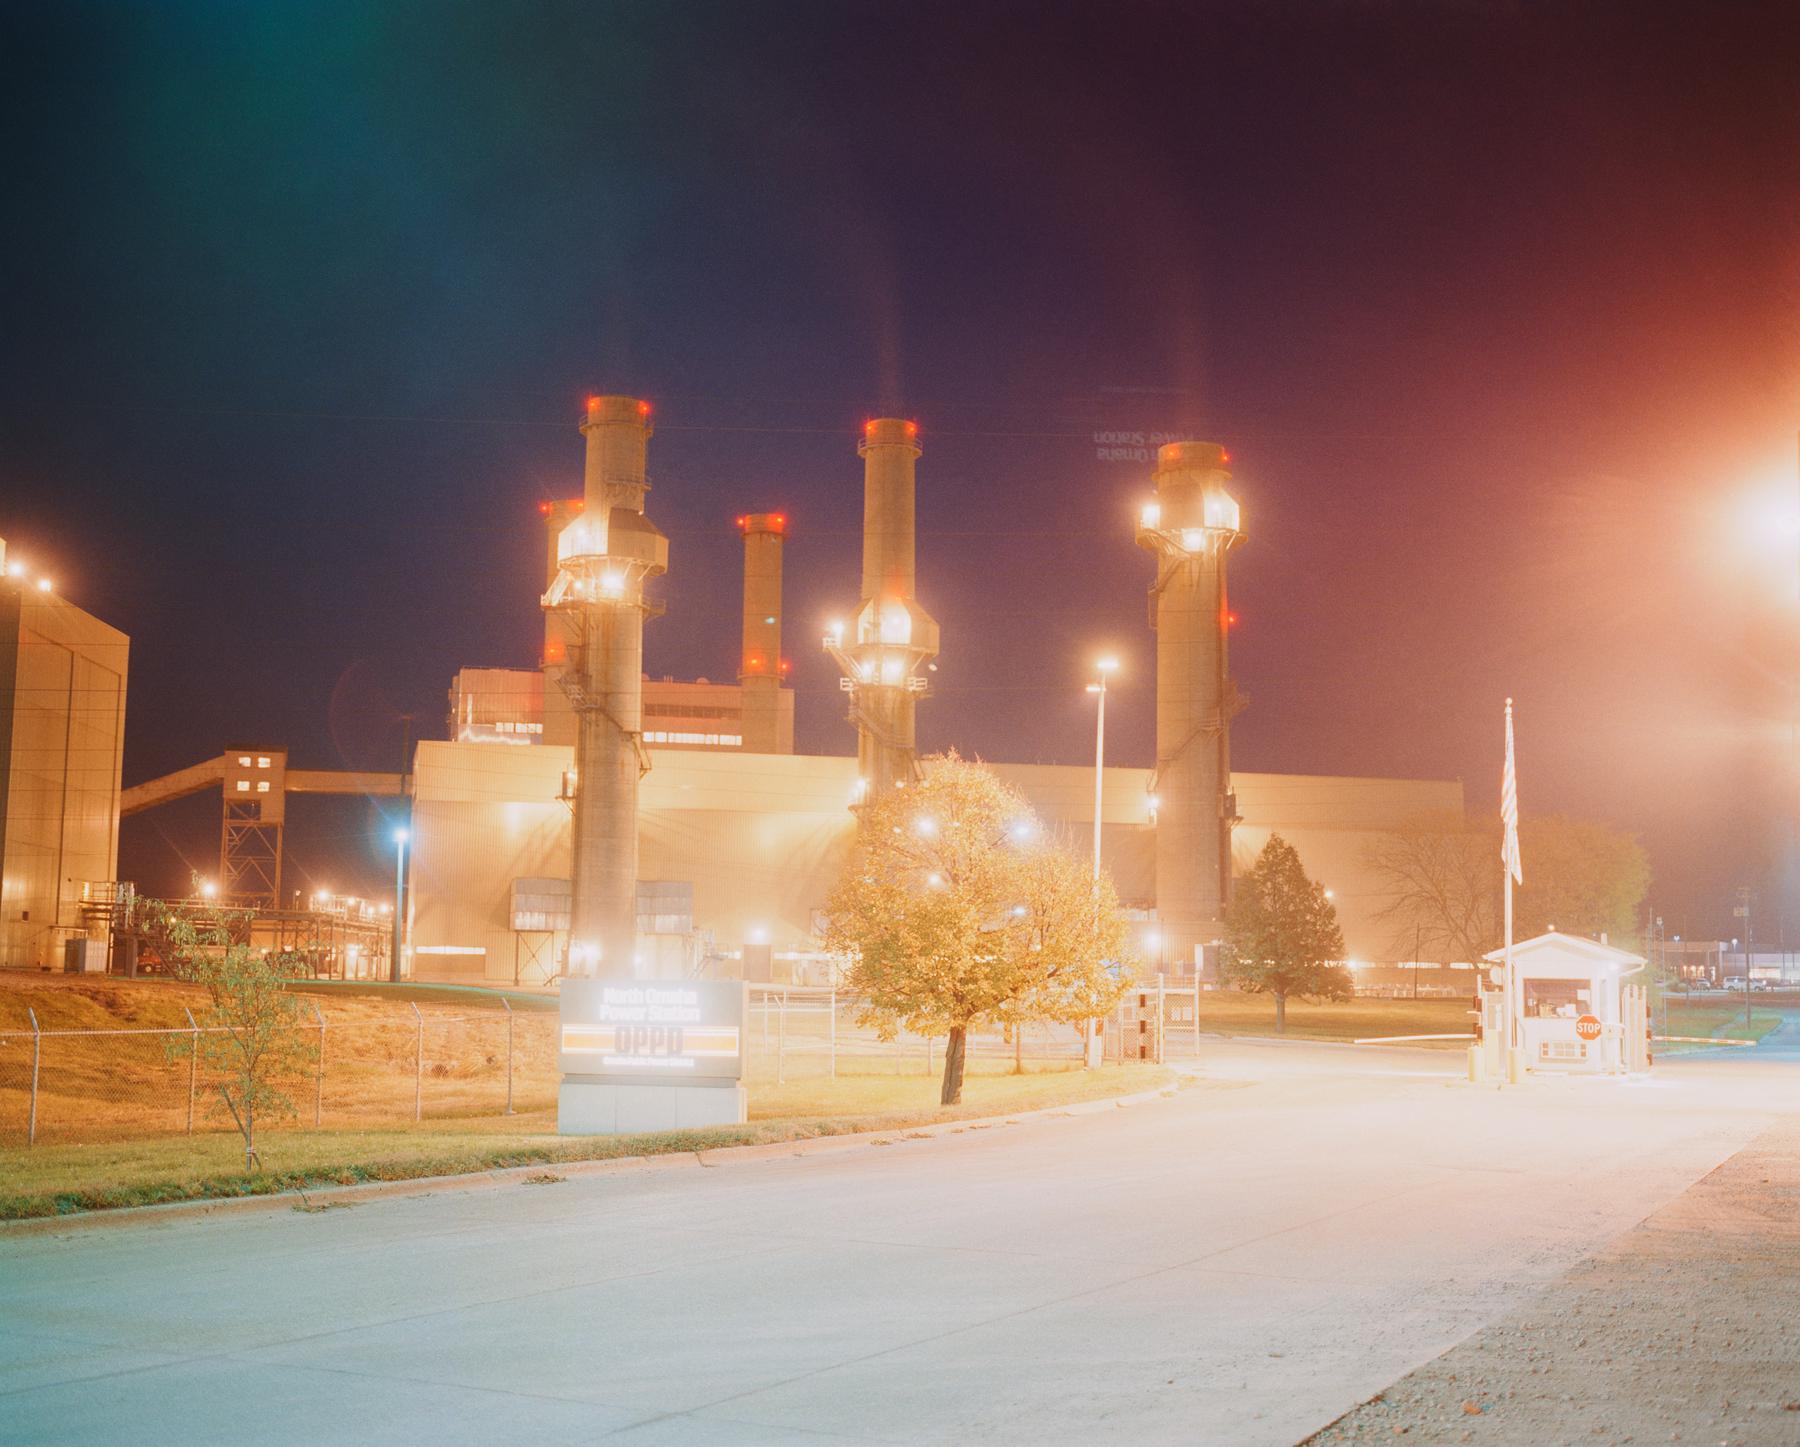 Color Photograph Gregory Halpern - Carnet de croquis d'Omaha : North Omaha Power Station, Omaha, NE, - Photographie